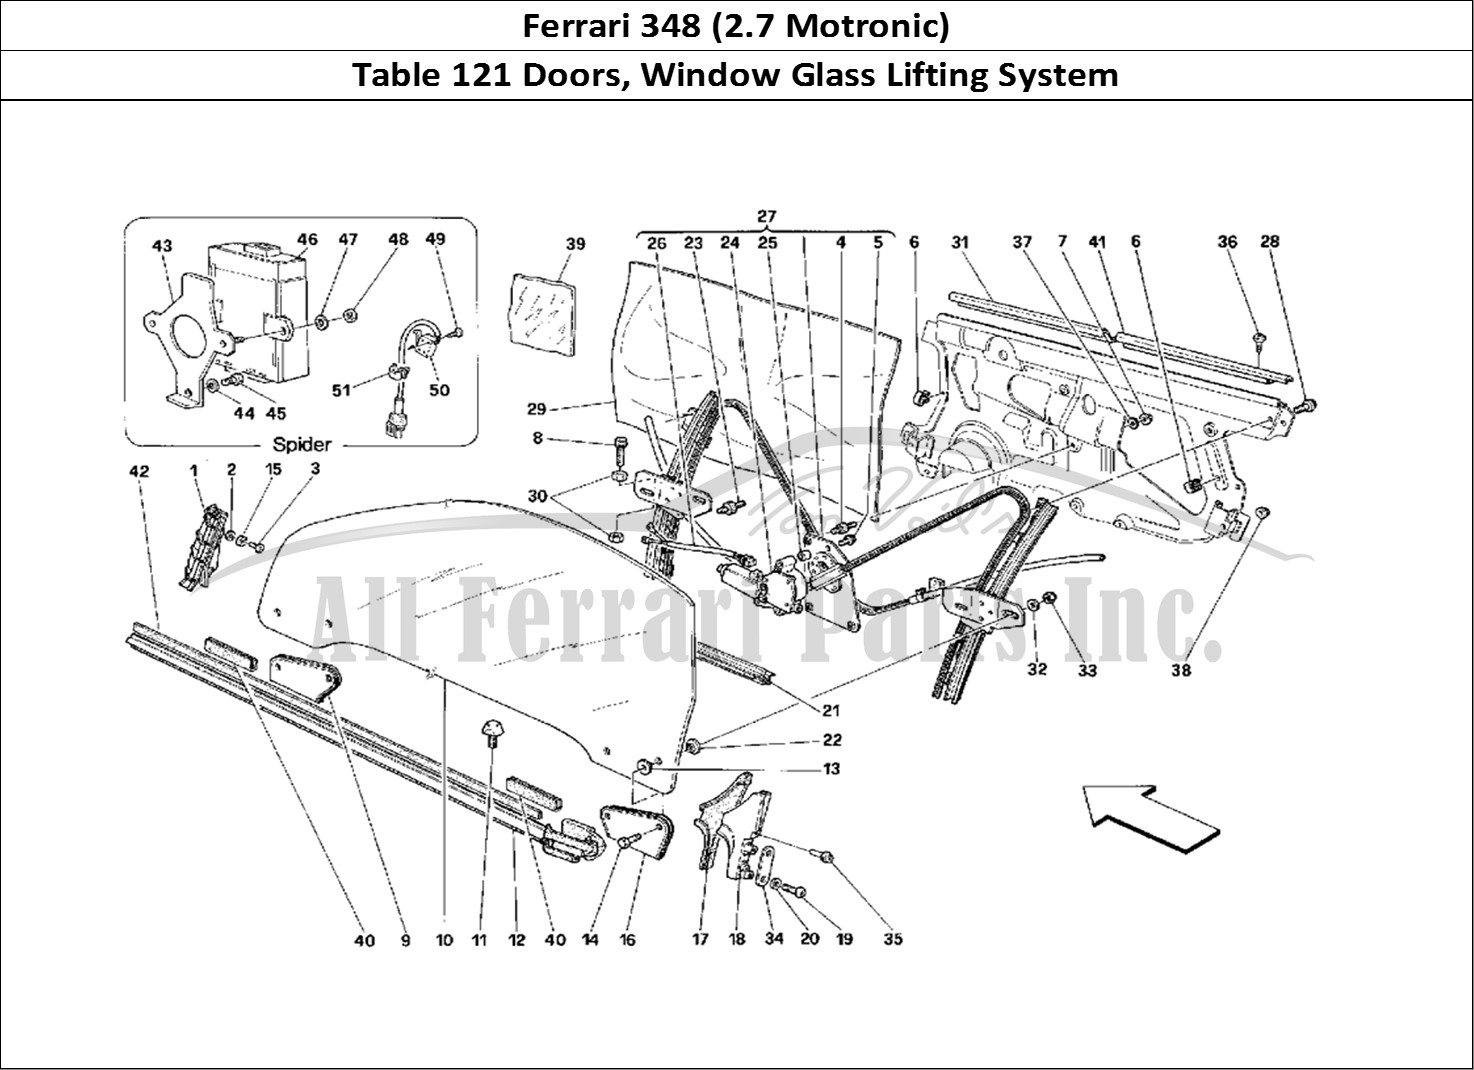 Ferrari Parts Ferrari 348 (2.7 Motronic) Page 121 Doors - Glass Lifting Dev